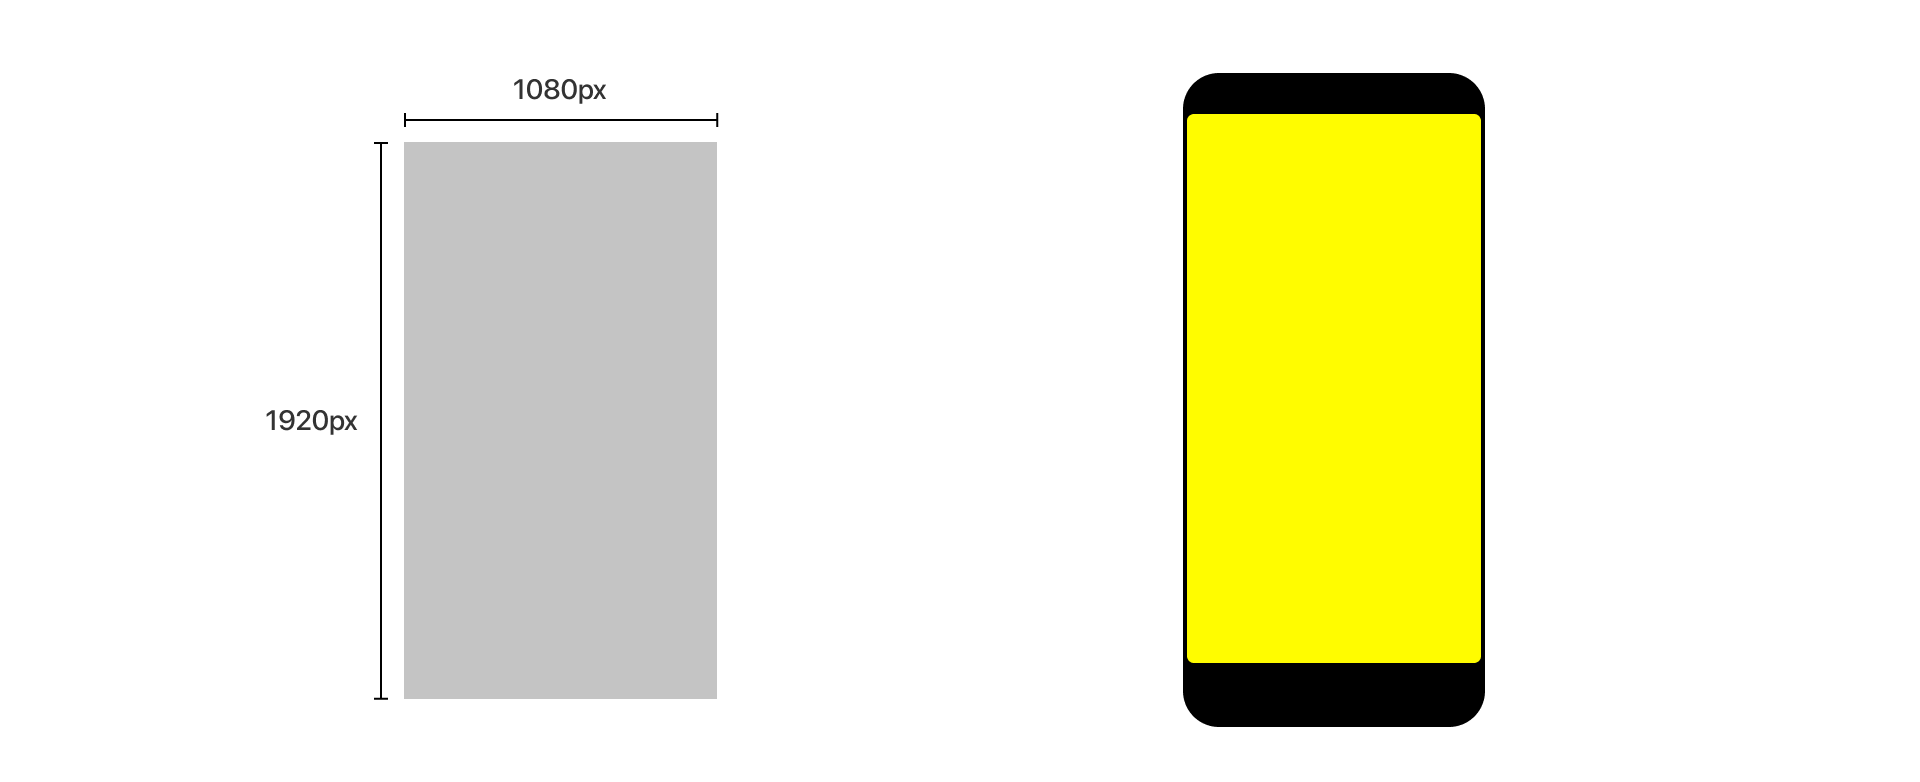 Mobile screen dimensions guide showing portrait and landscape orientations.